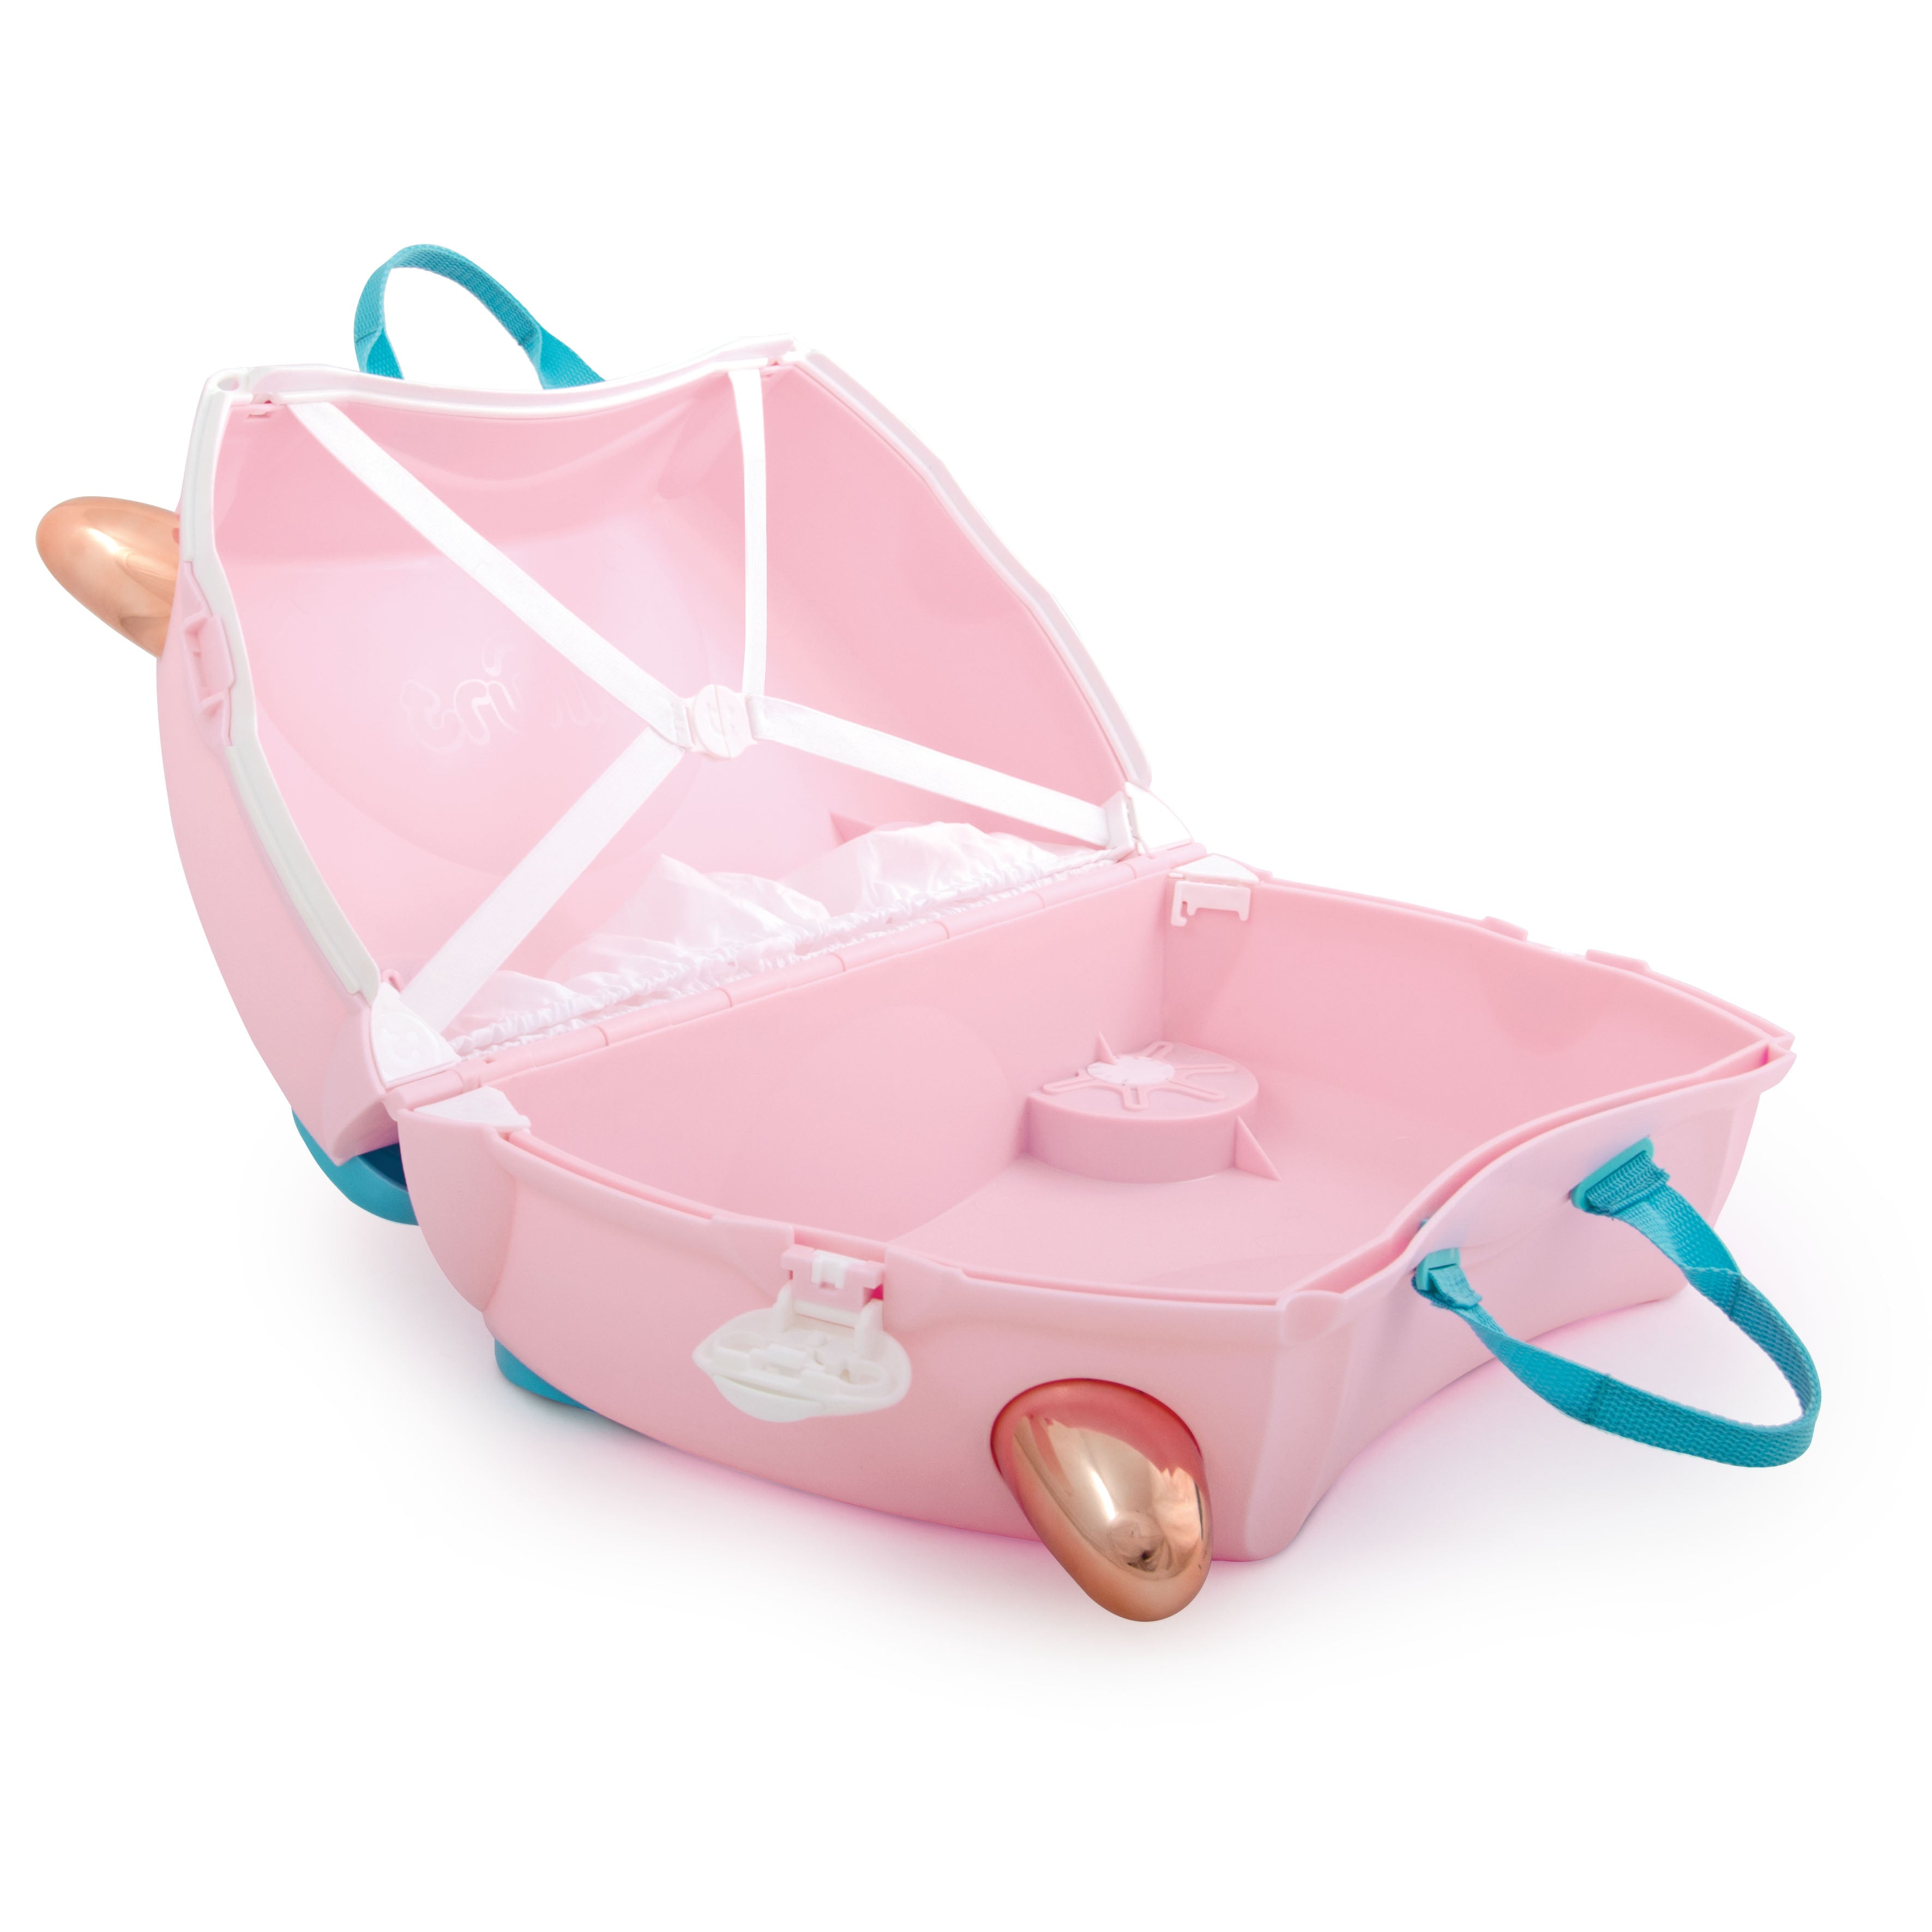 Trunkie - Flossie Flamingo Ride on Luggage